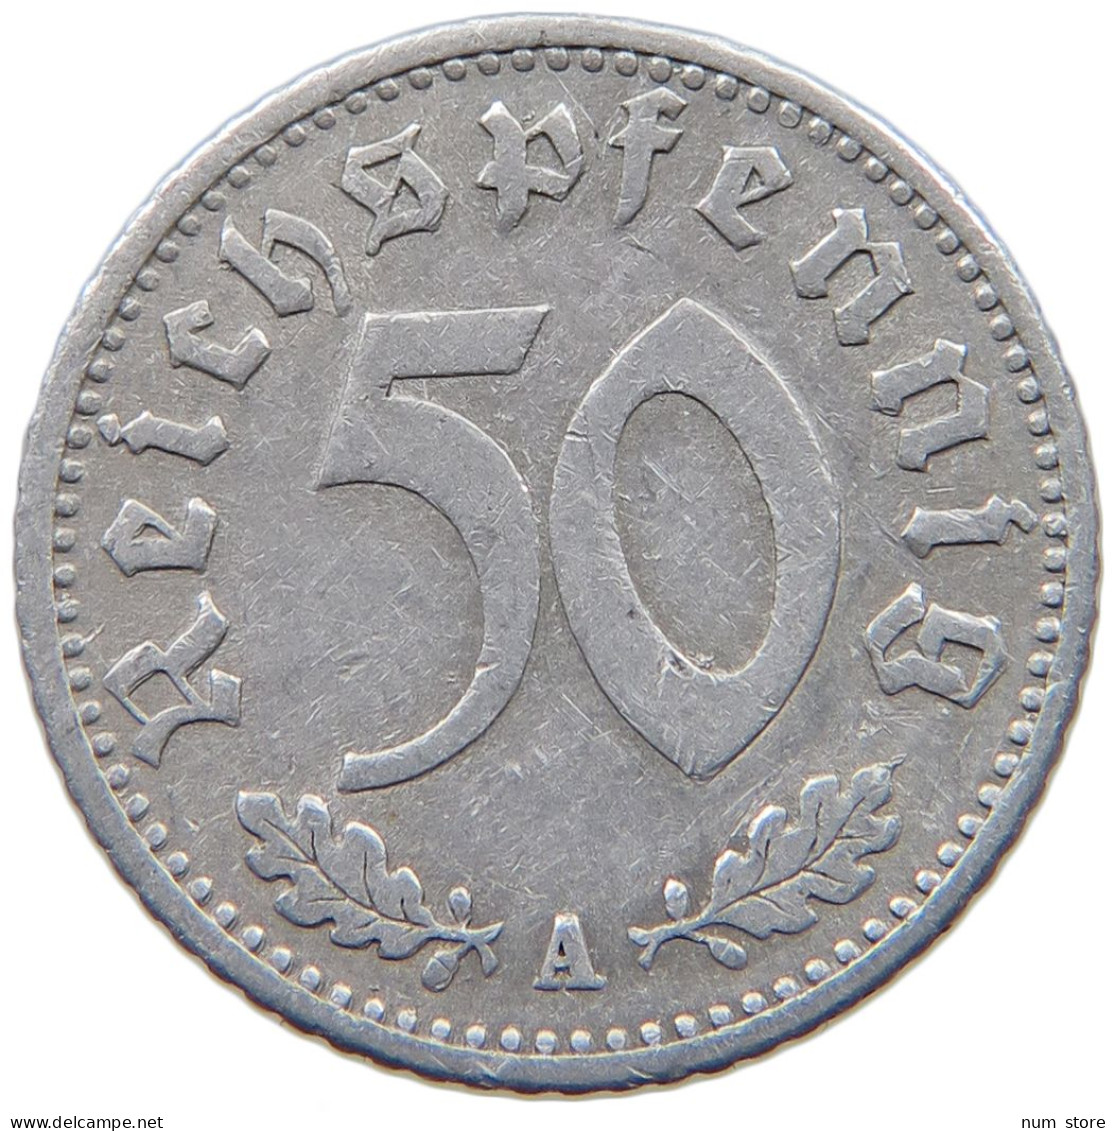 GERMANY 50 PFENNIG 1935 A #c007 0435 - 50 Reichspfennig